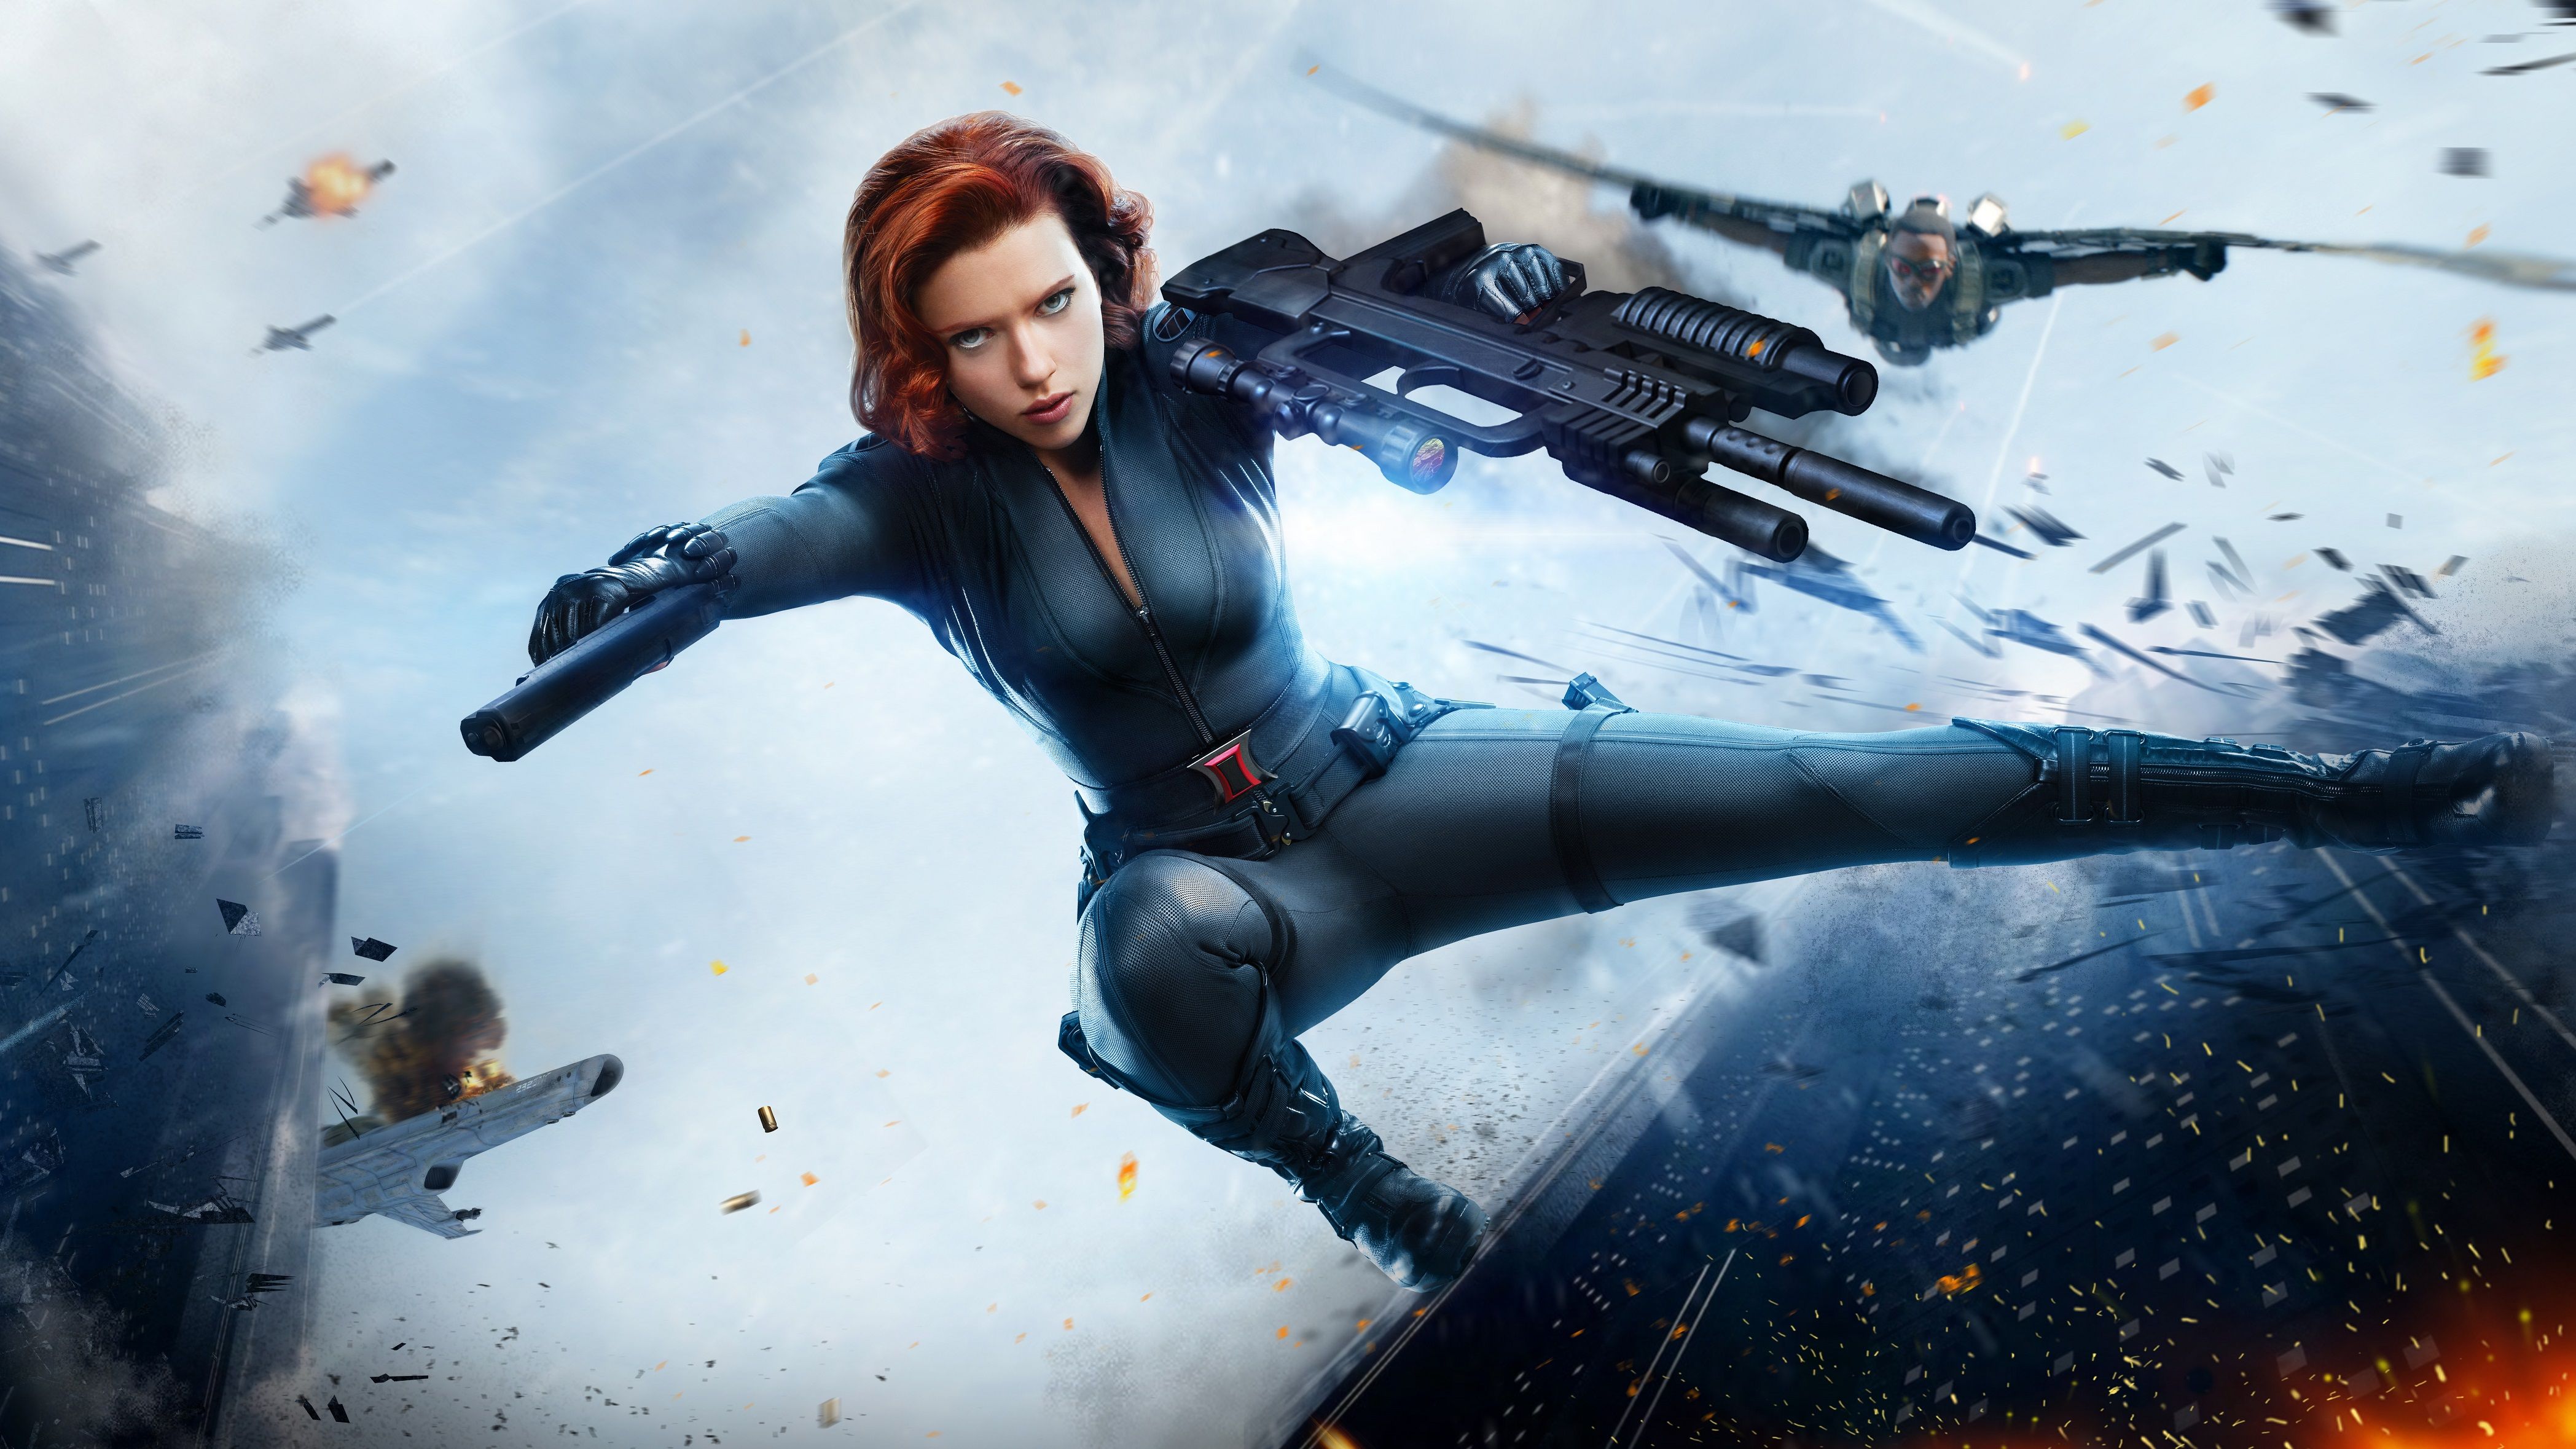 Black Widow 4k 2019, HD Superheroes, 4k Wallpapers, Images, Backgrounds